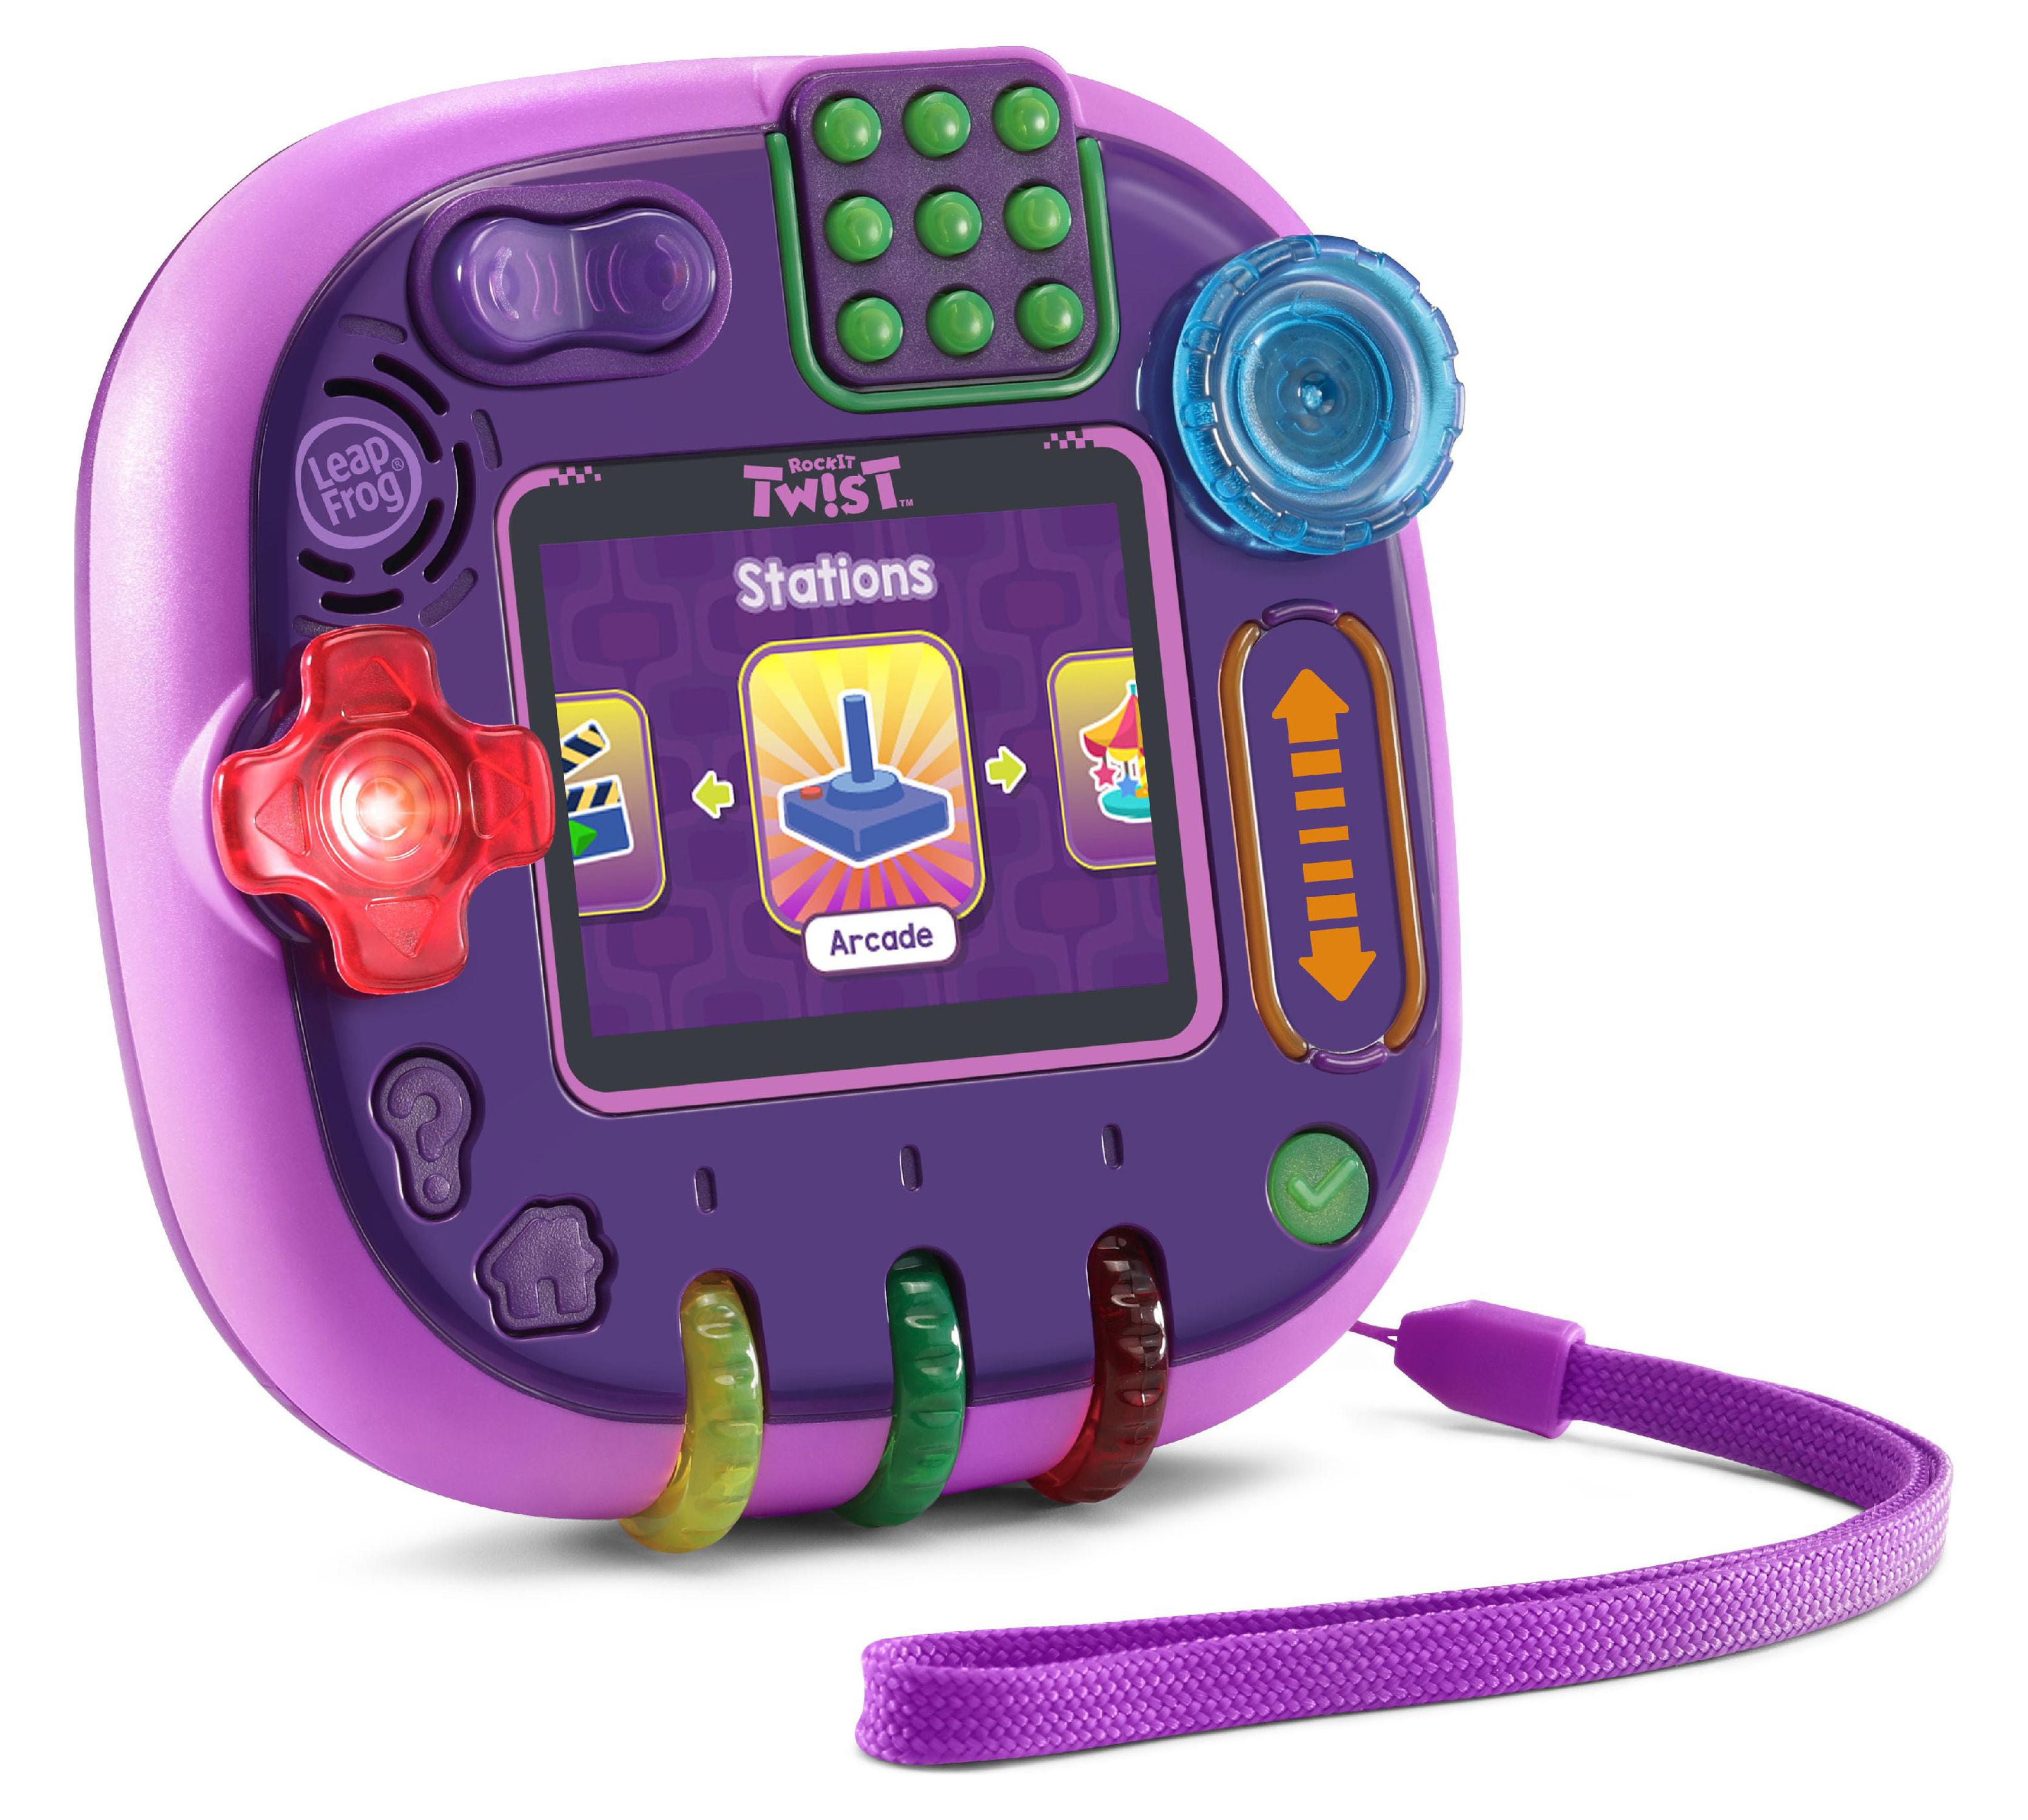 LeapFrog RockIt Twist Handheld Learning Game System, Purple - image 3 of 18